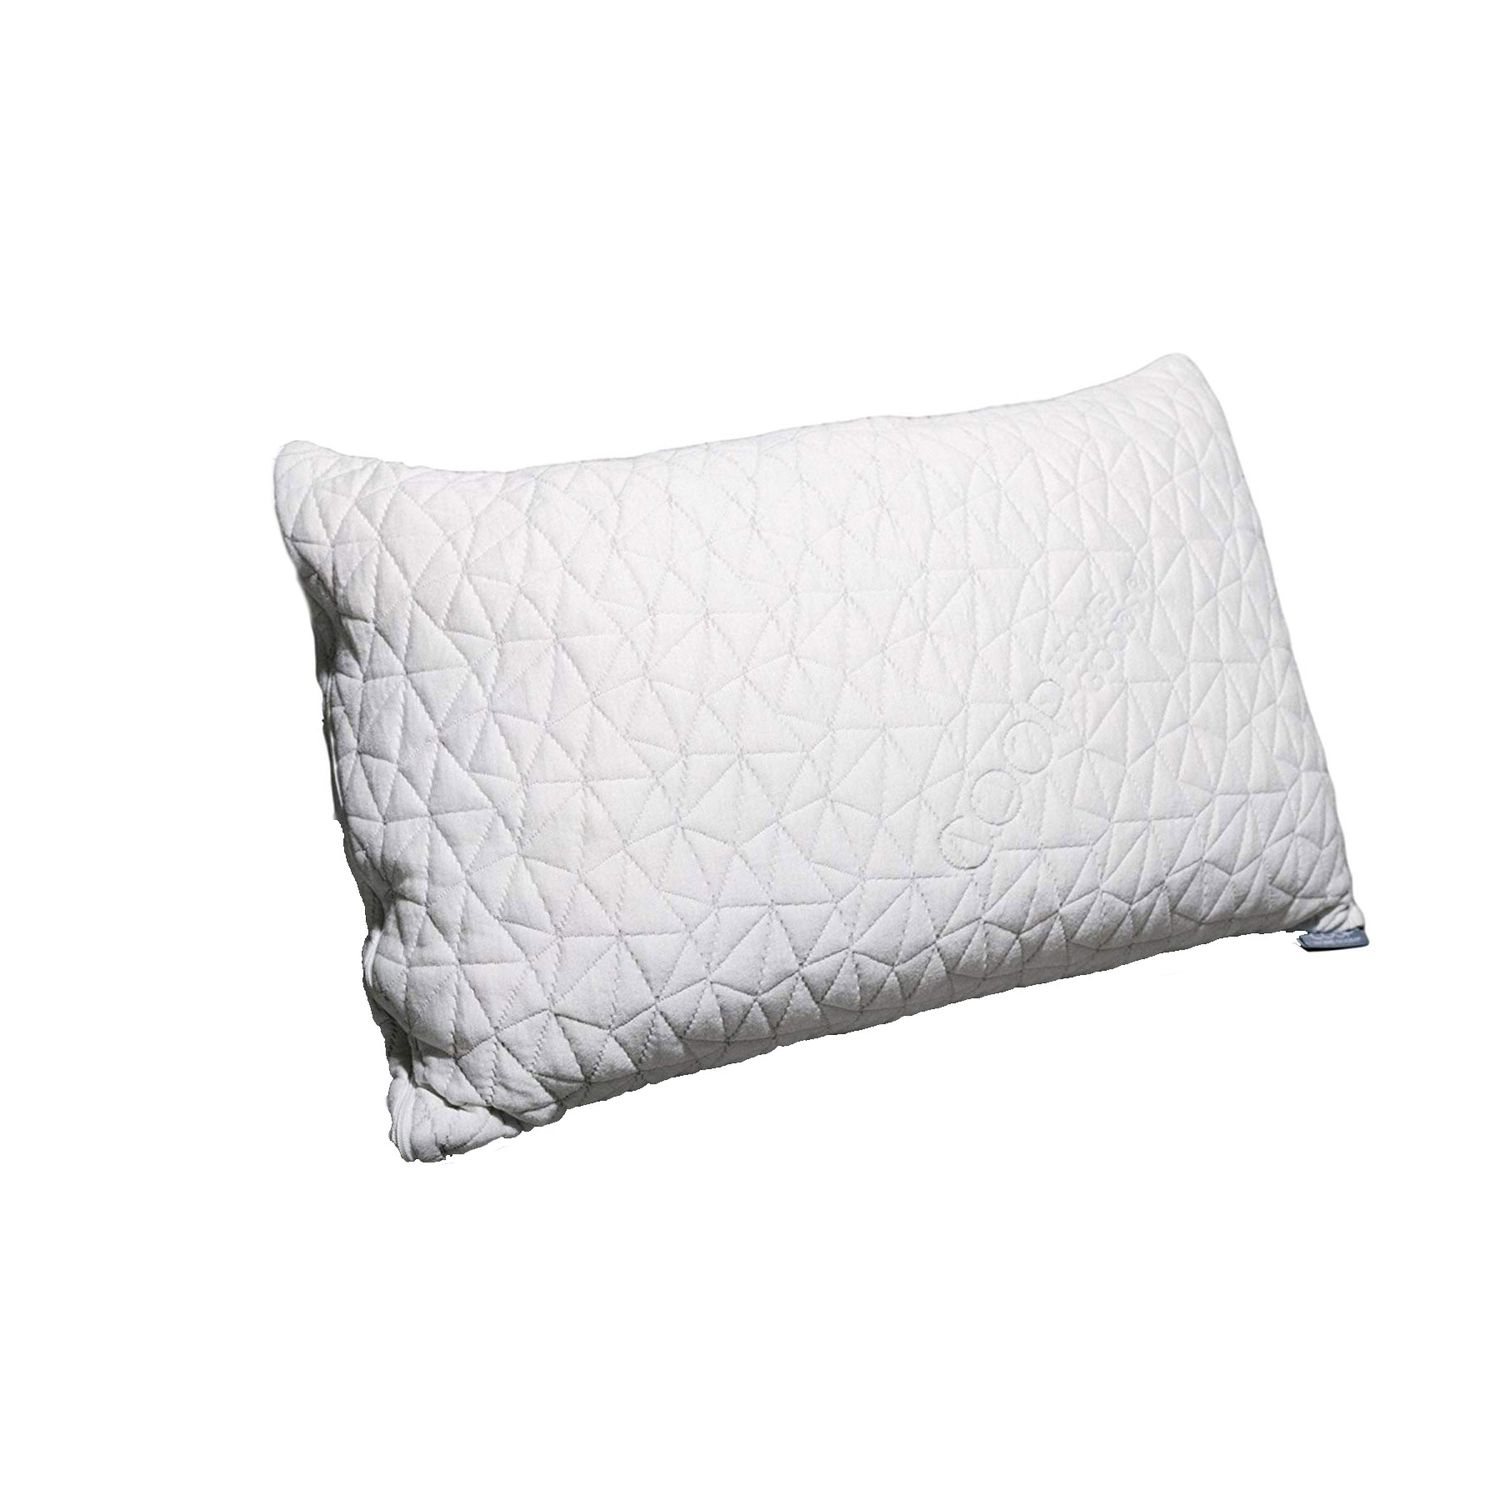 Coop Home Goods Hypoallergenic Shredded Memory Foam Pillow